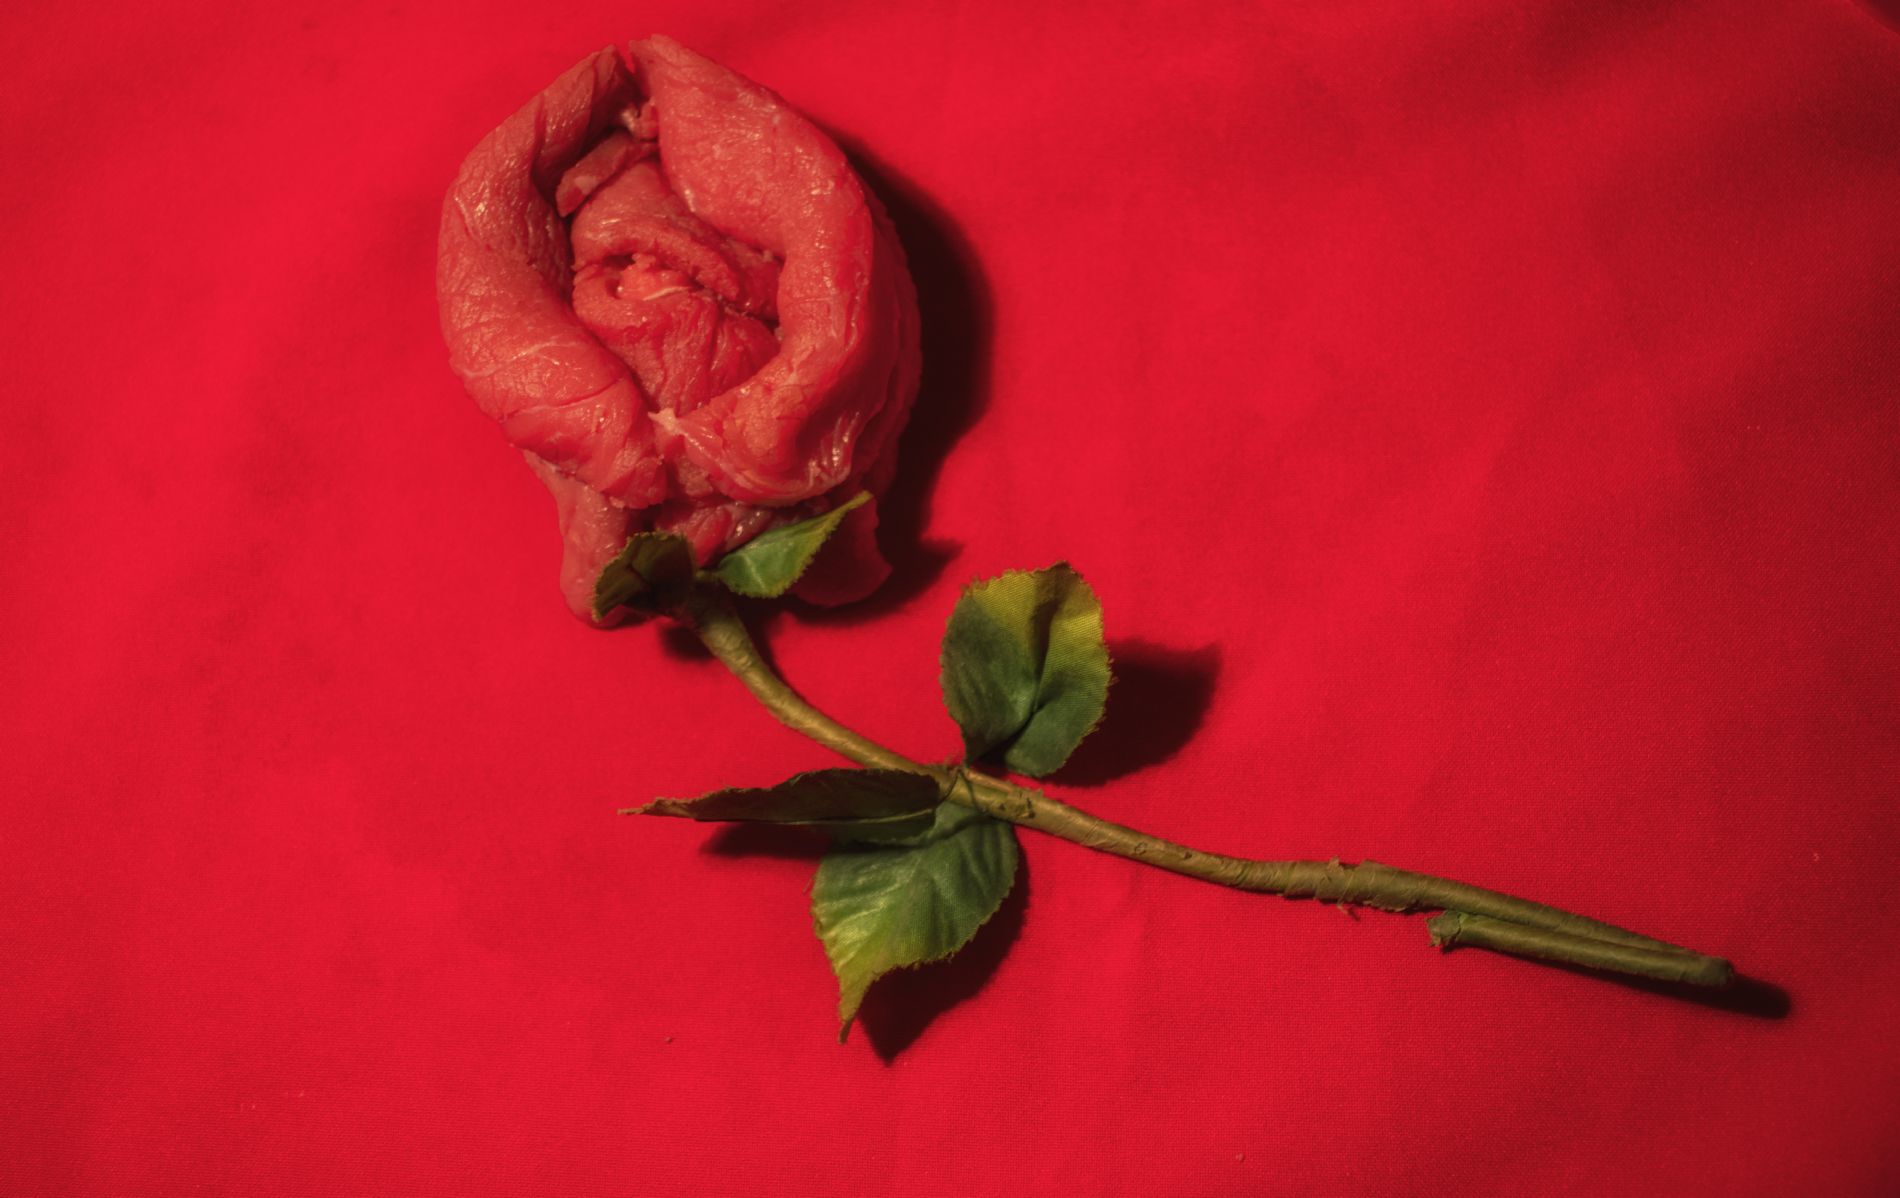 Tercer premio: Sandra Moreno Espaa, por su fotografa `Una rosa que alimenta`